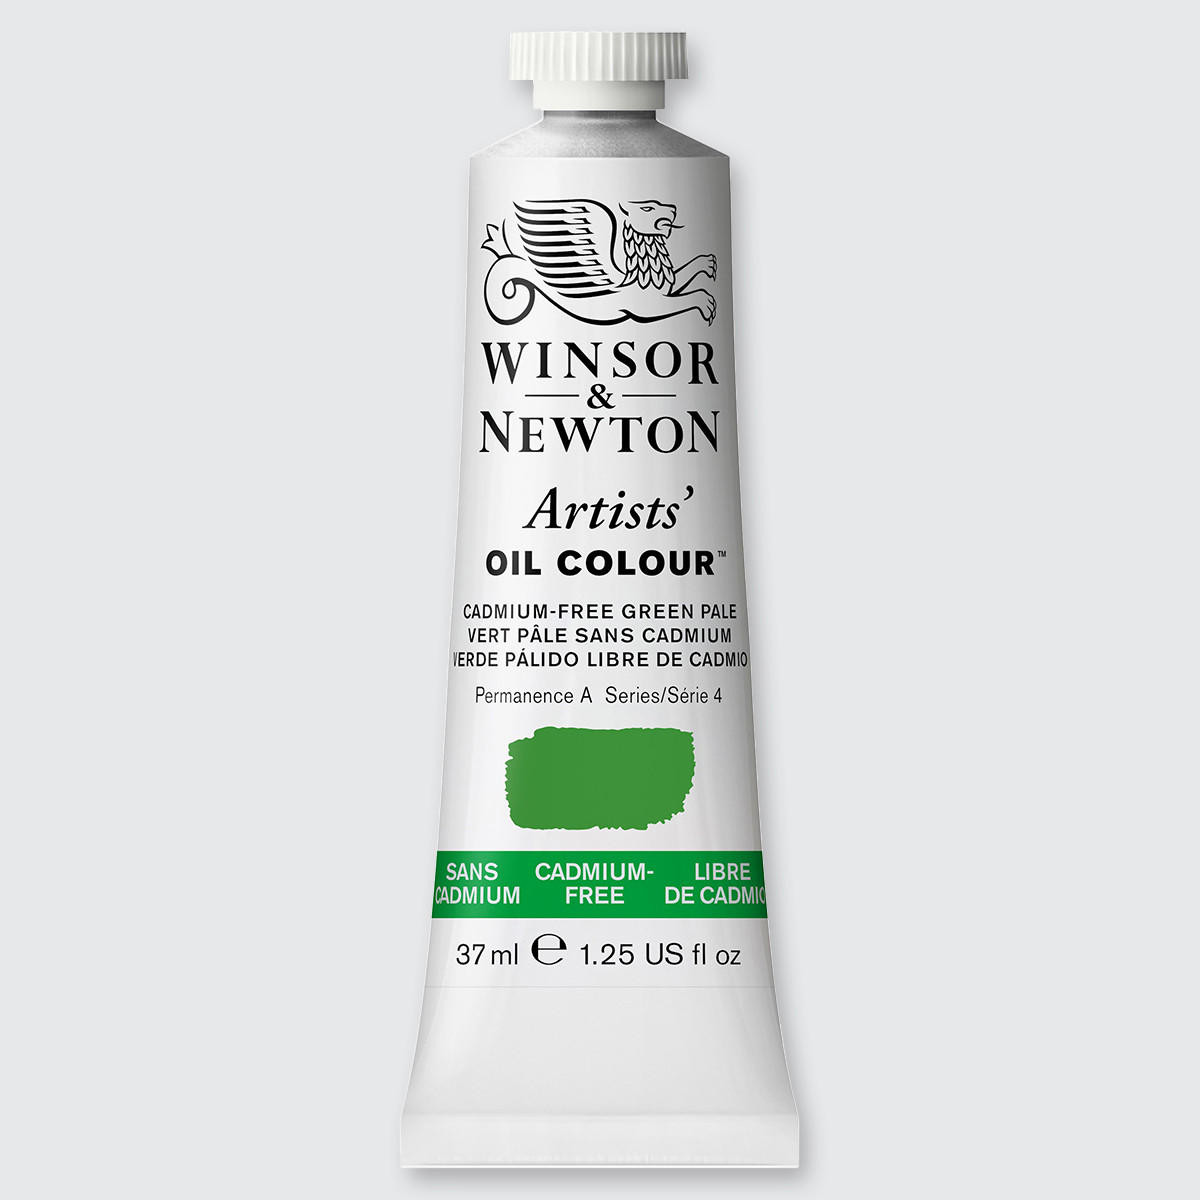 Winsor & Newton Artists’ Oil Colour 37ml Cadmium Free Green Pale